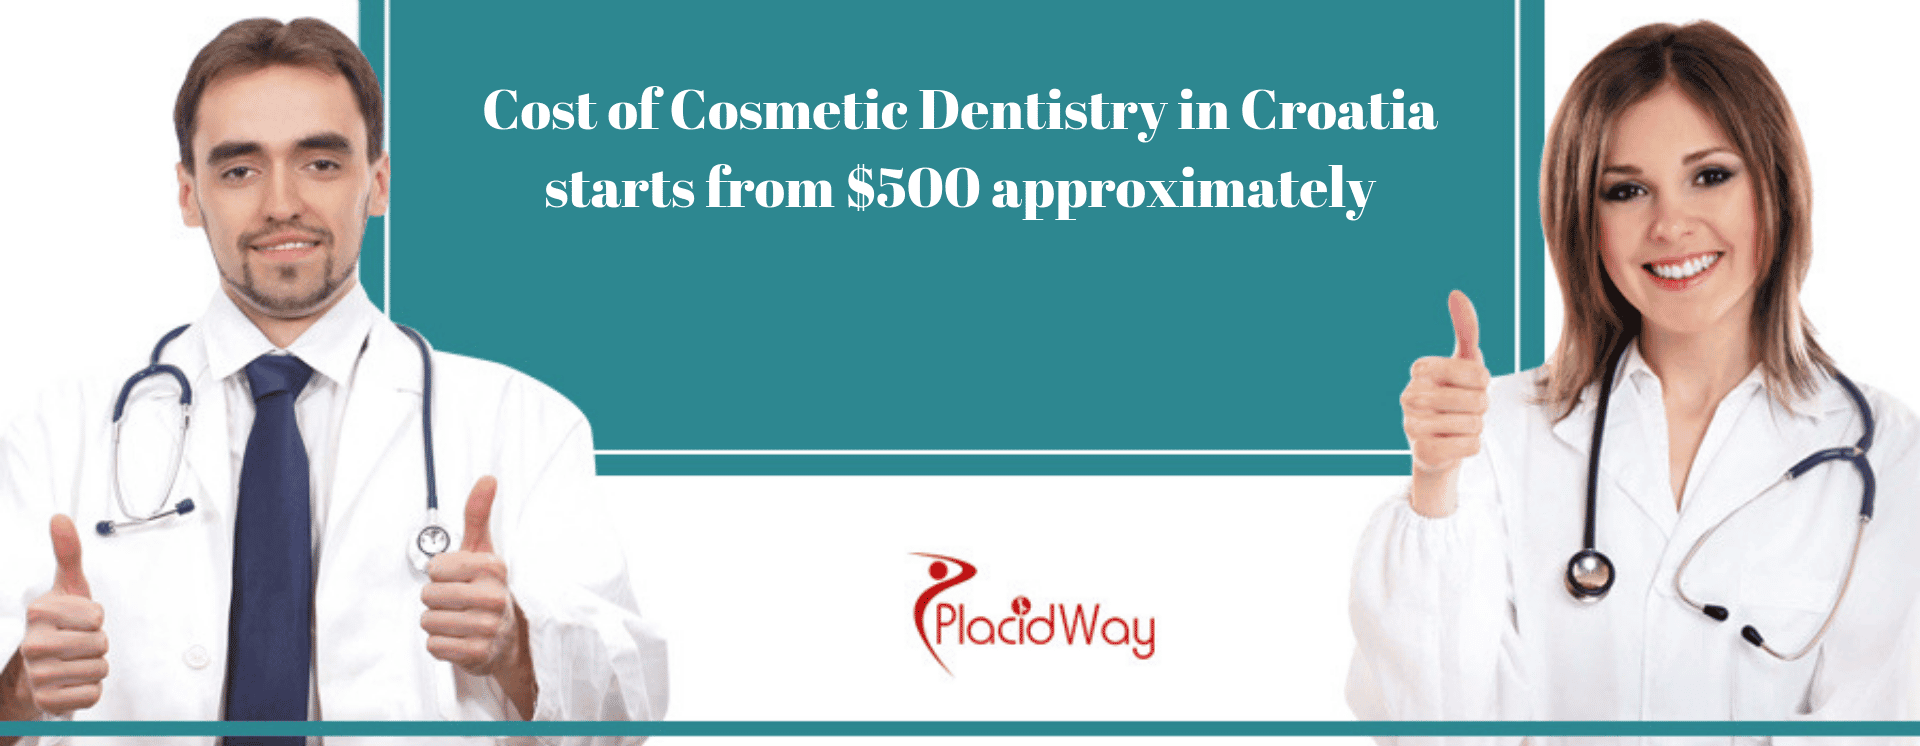 Cosmetic Dentistry in Croatia Cost